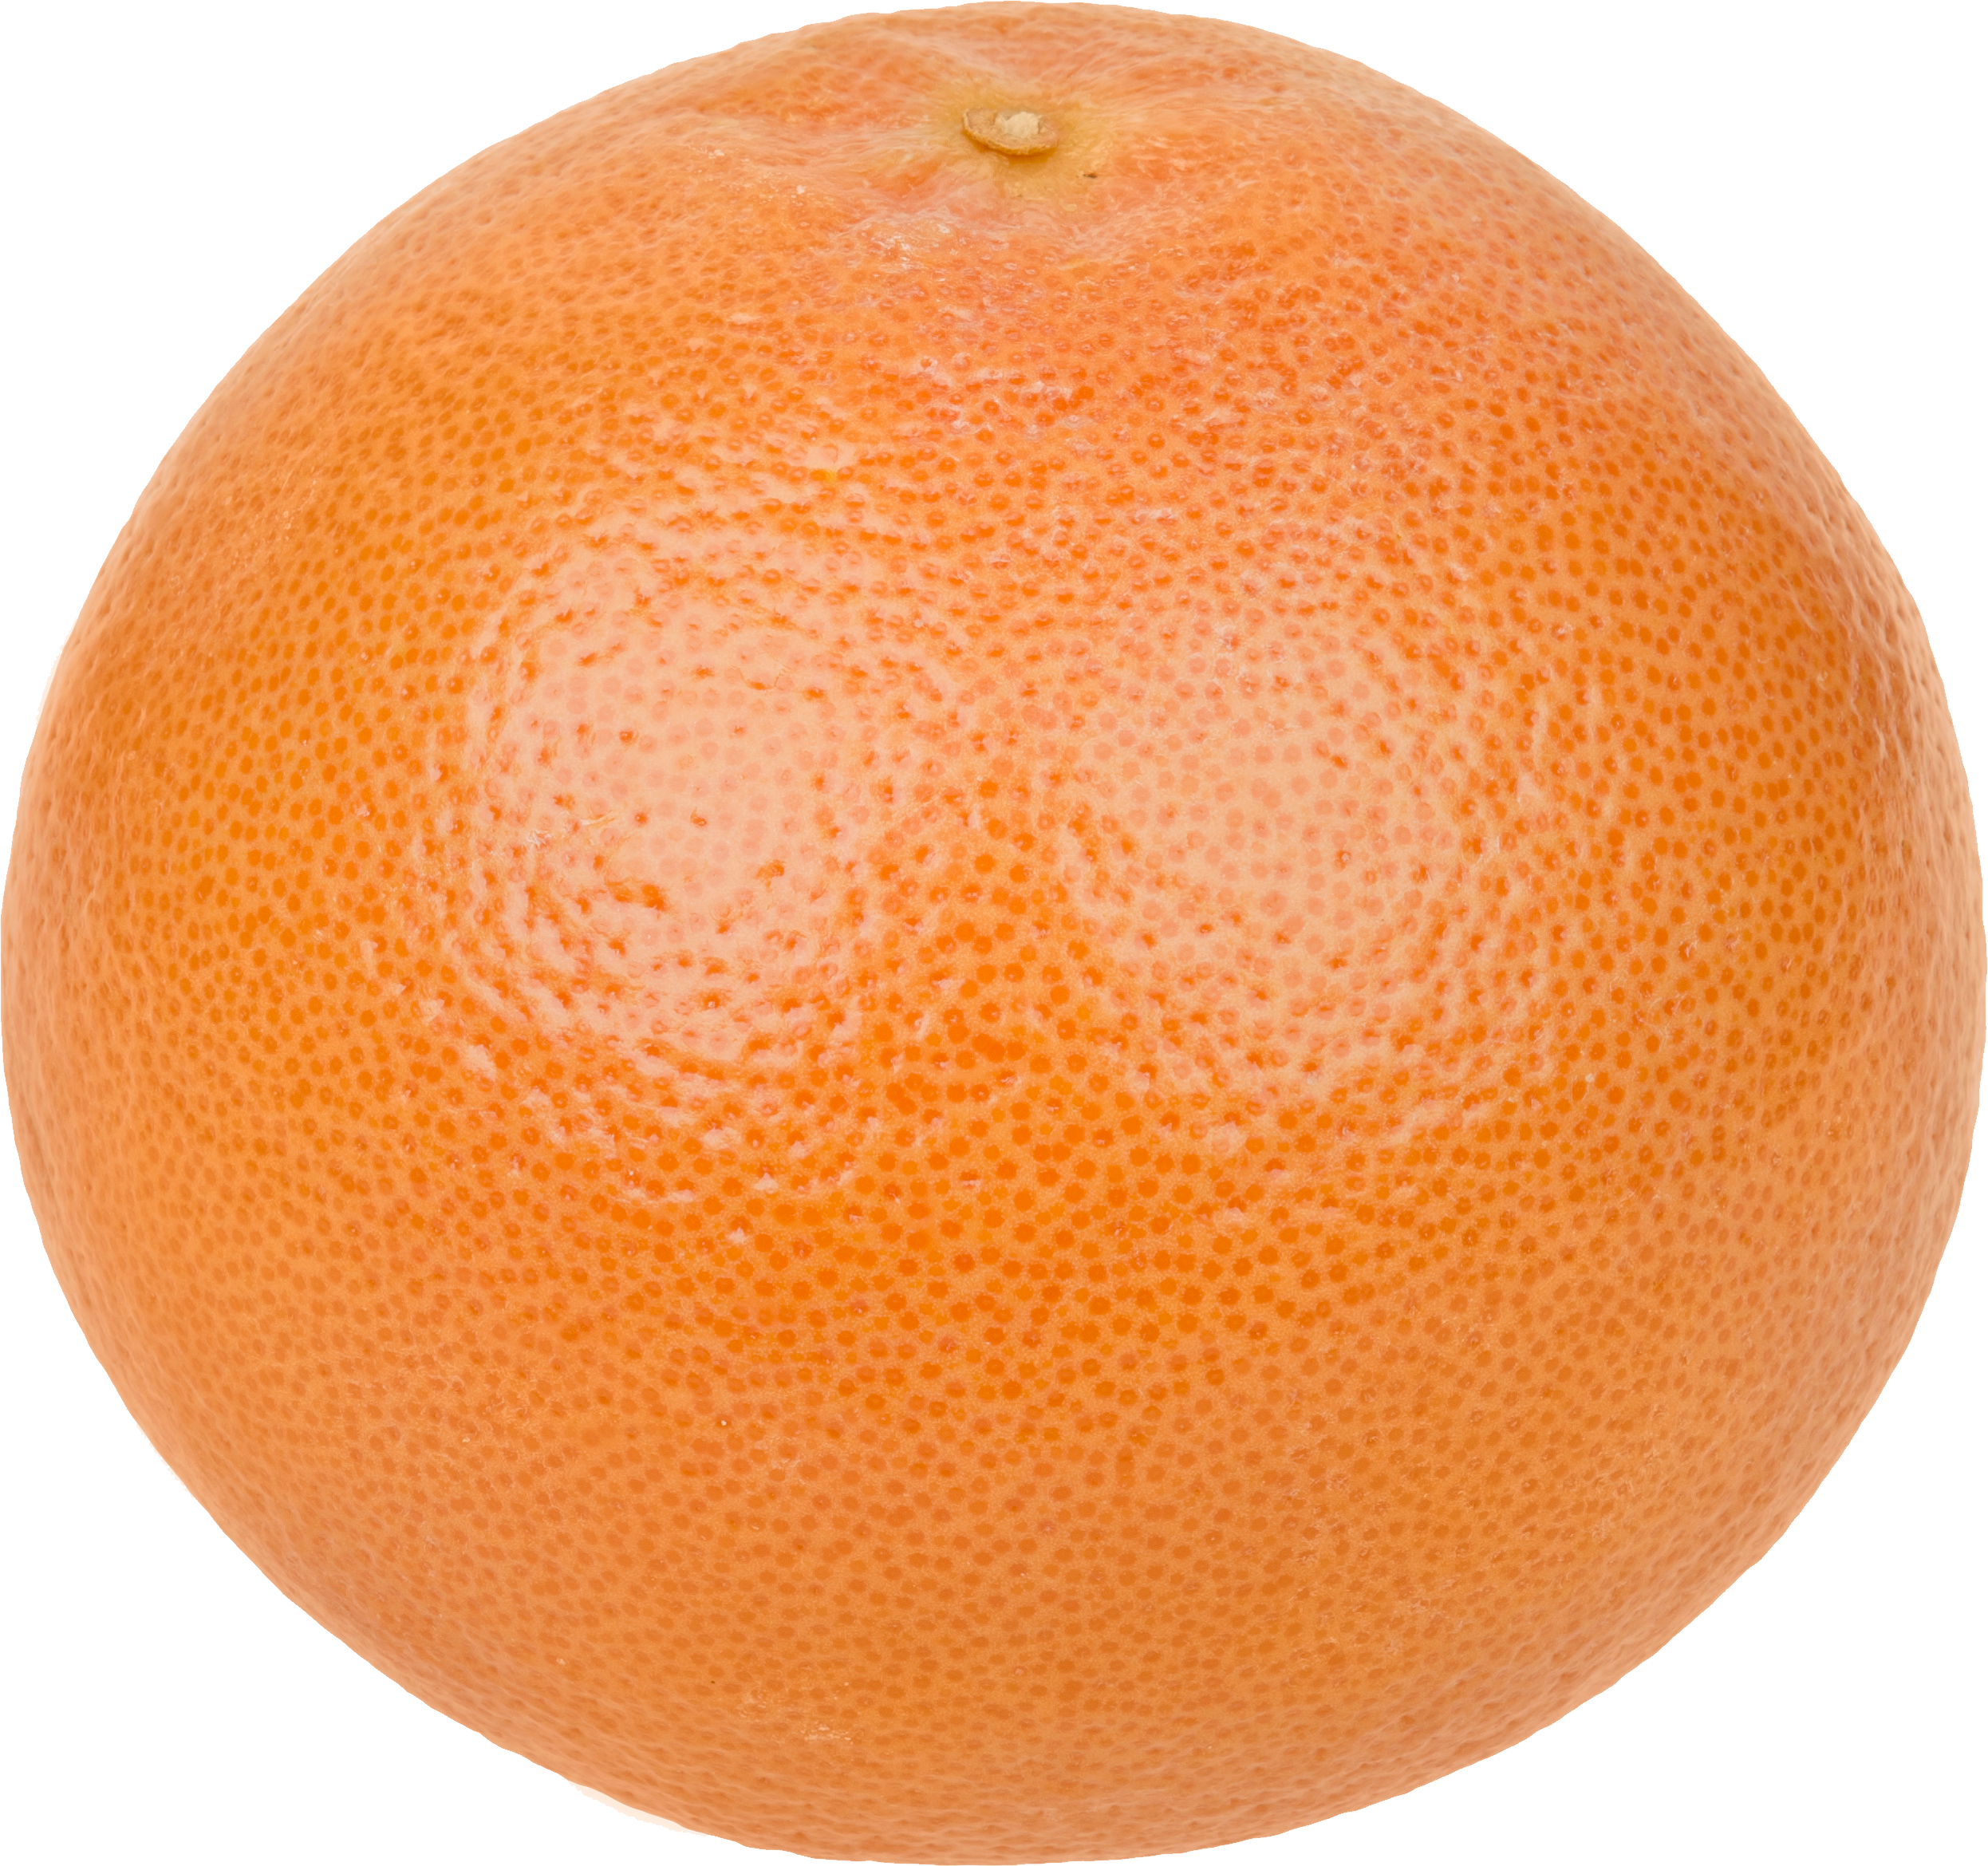 Grapefruit PNG images Download